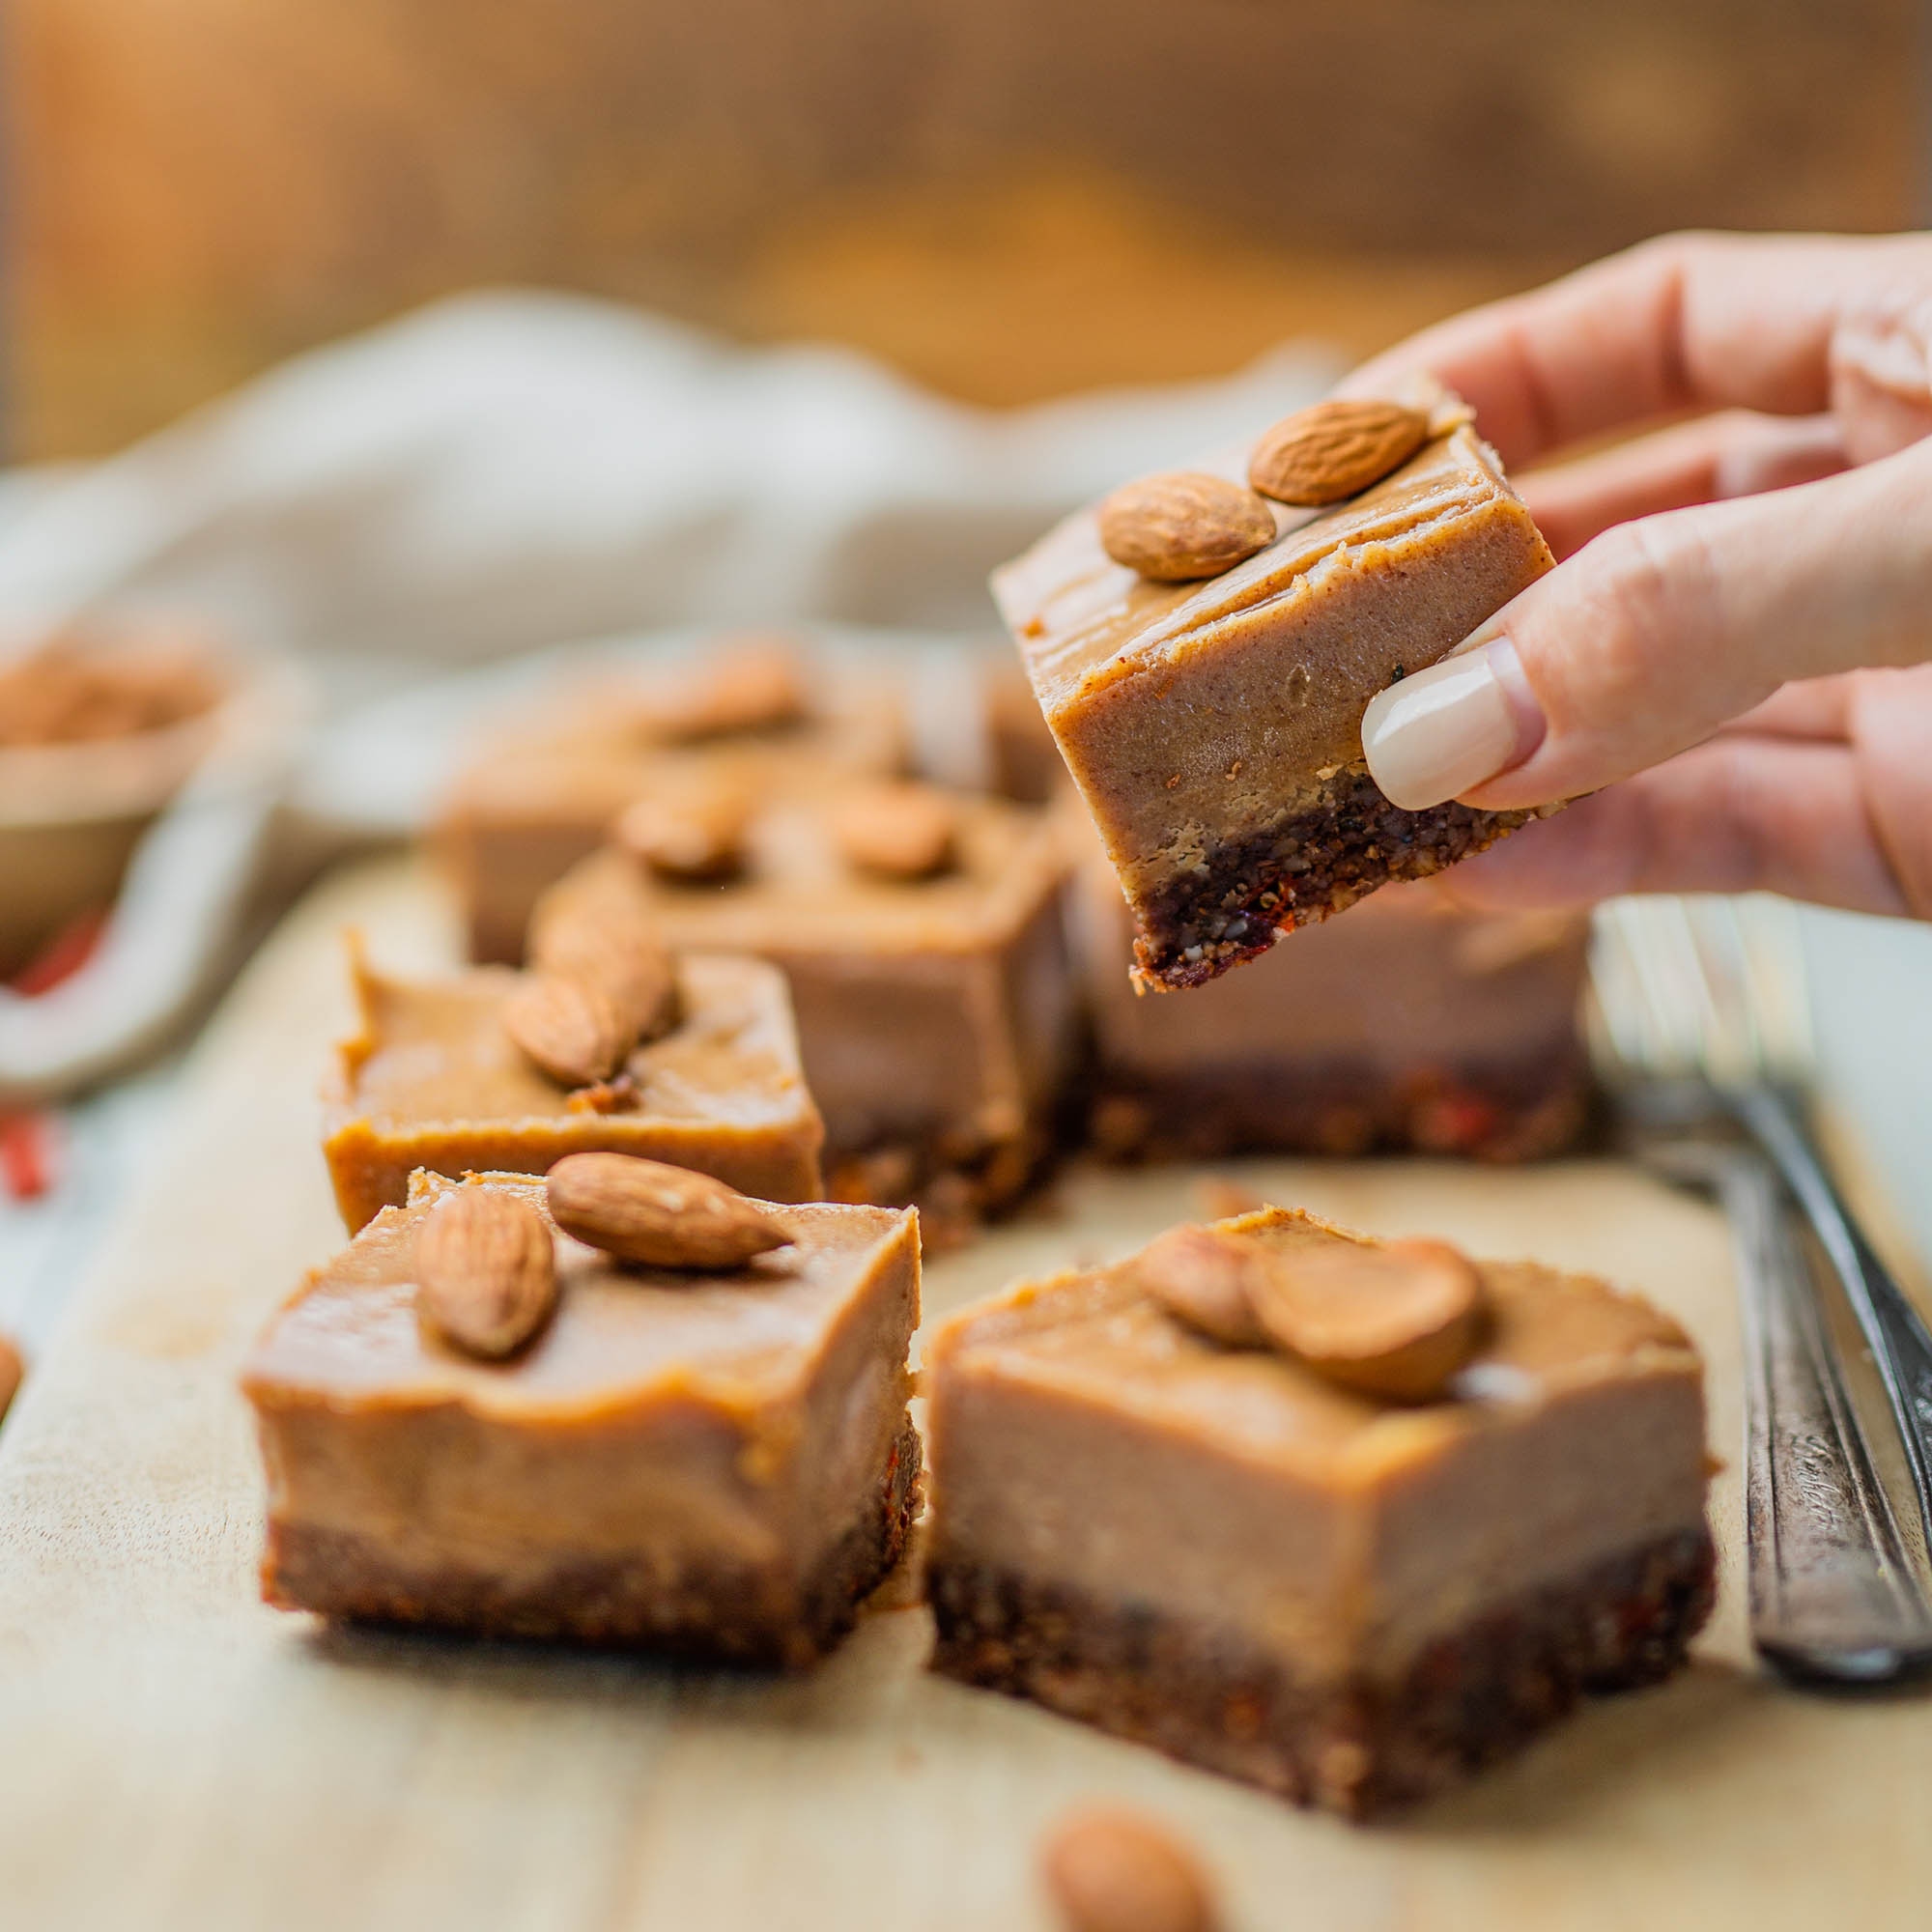 Raw Vegan Toffee Almond Slice – No Dates